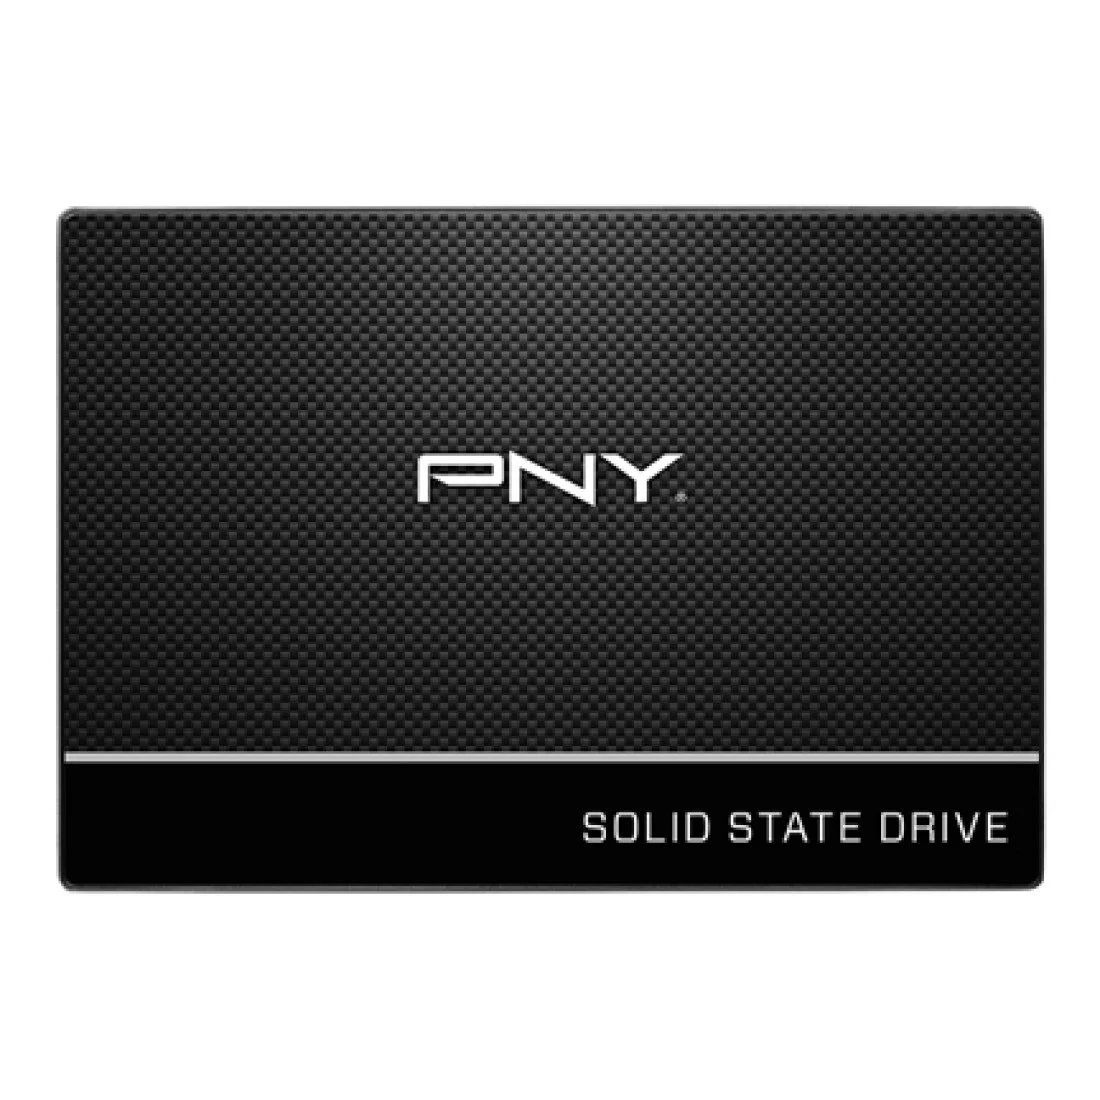 Disque SSD PNY CS900 250Go - S-ATA 2,5 - SSD7CS900-250-RB